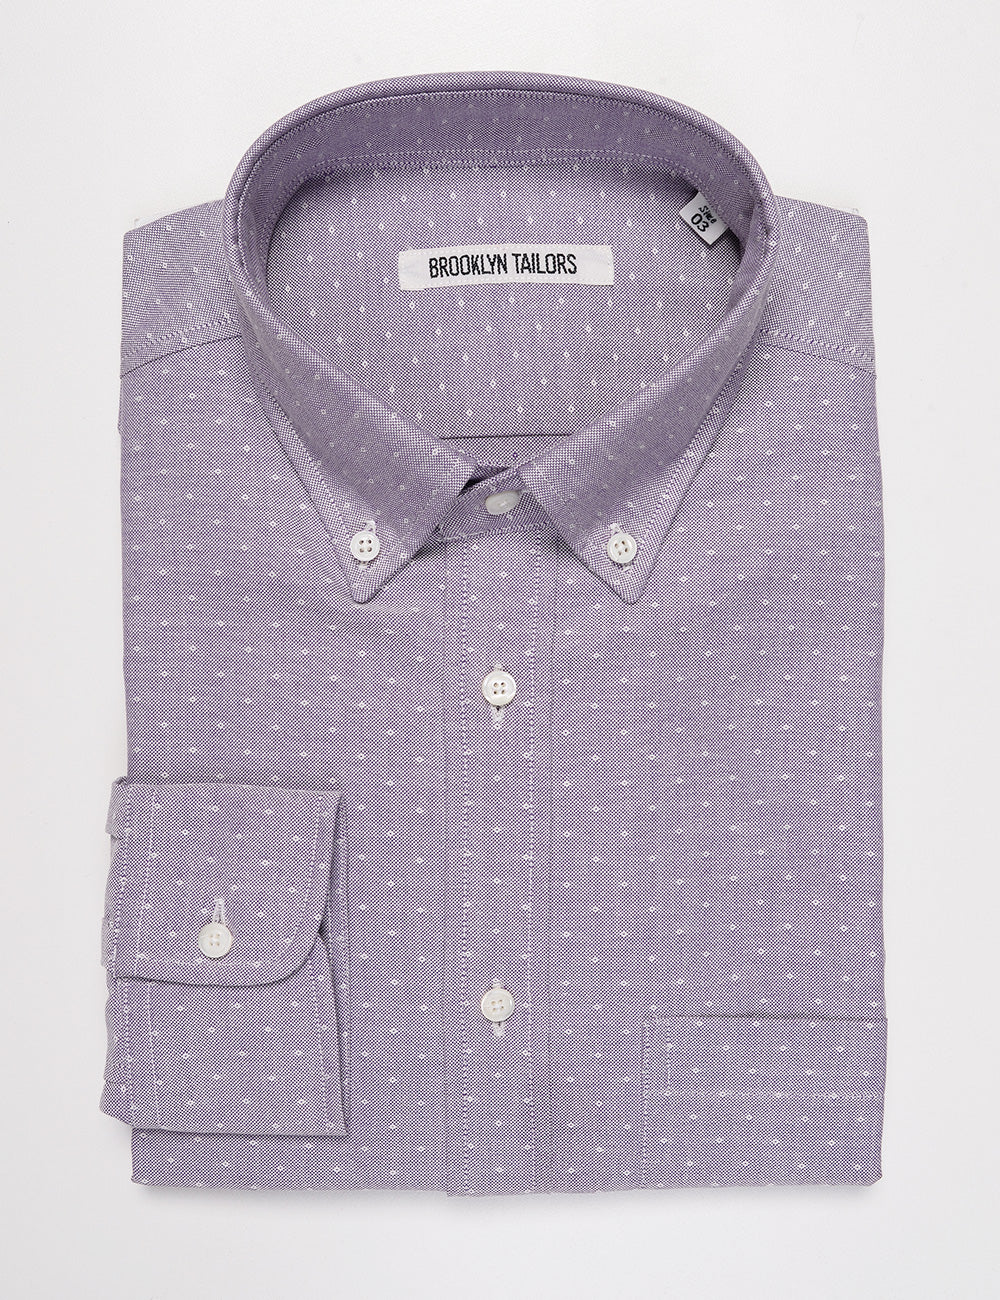 BKT10 Slim Casual Shirt in Eyelet Oxford - Lavender